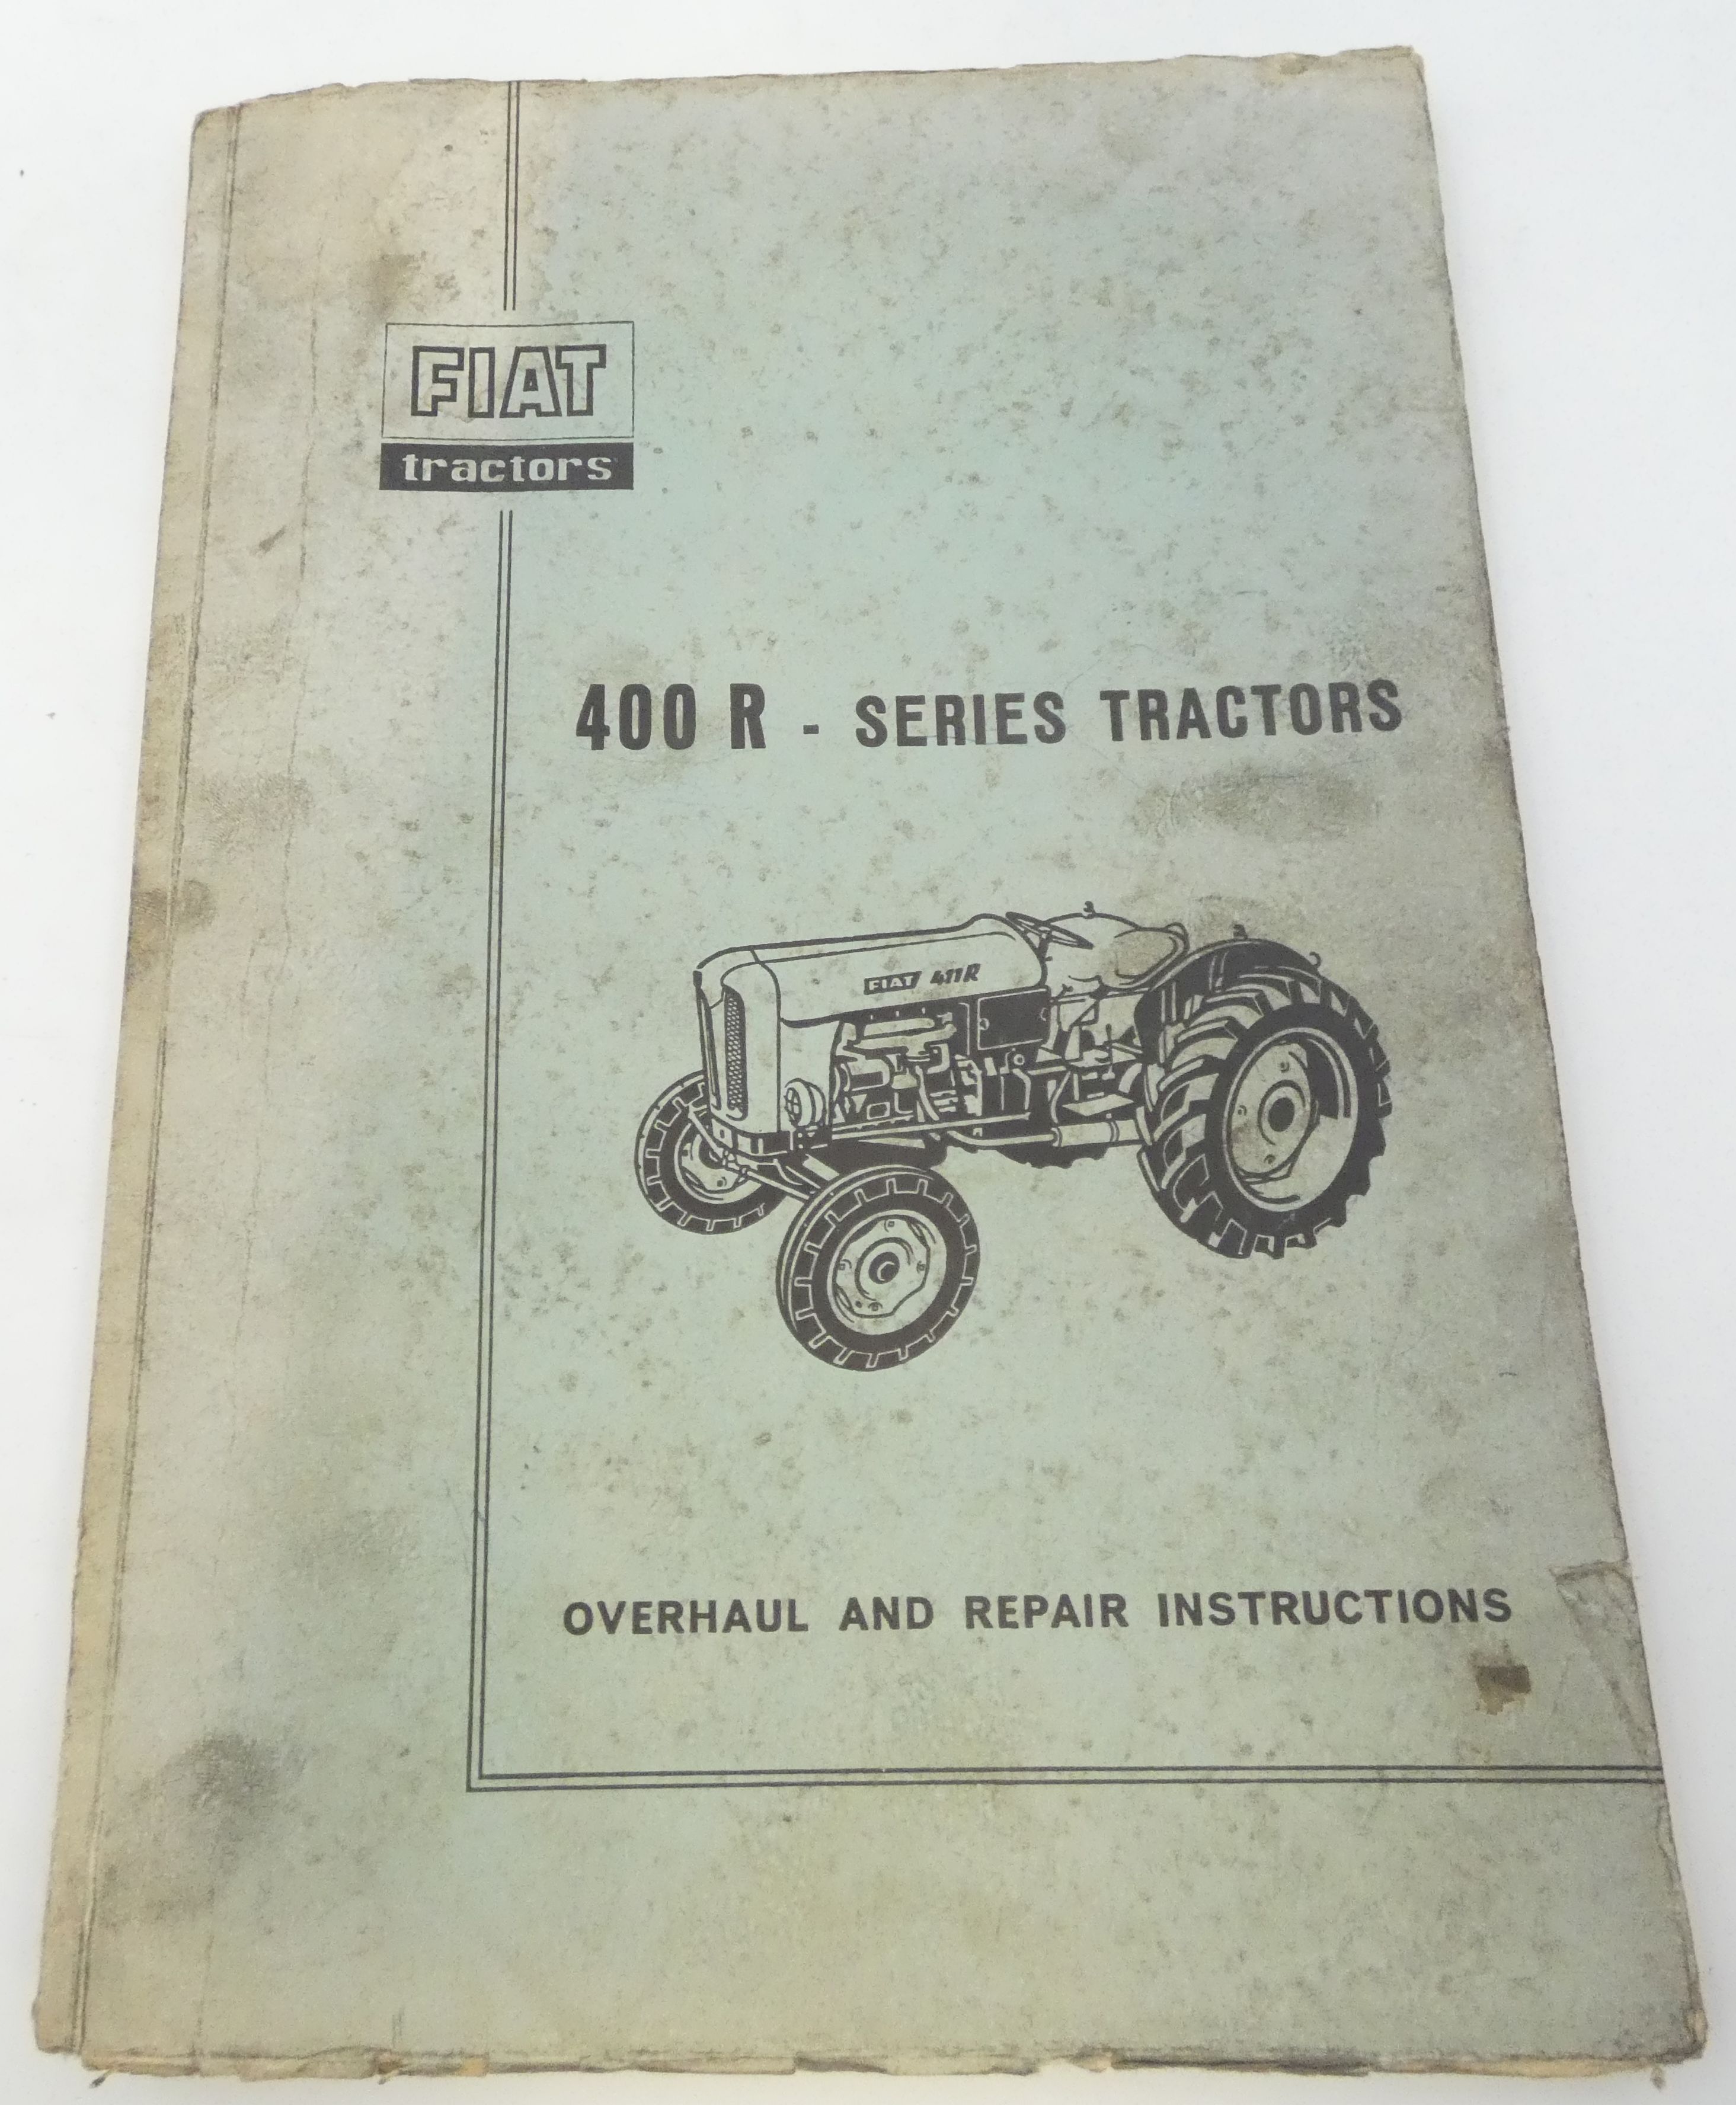 Fiat 400R - series tractors overhaul and repair instructions